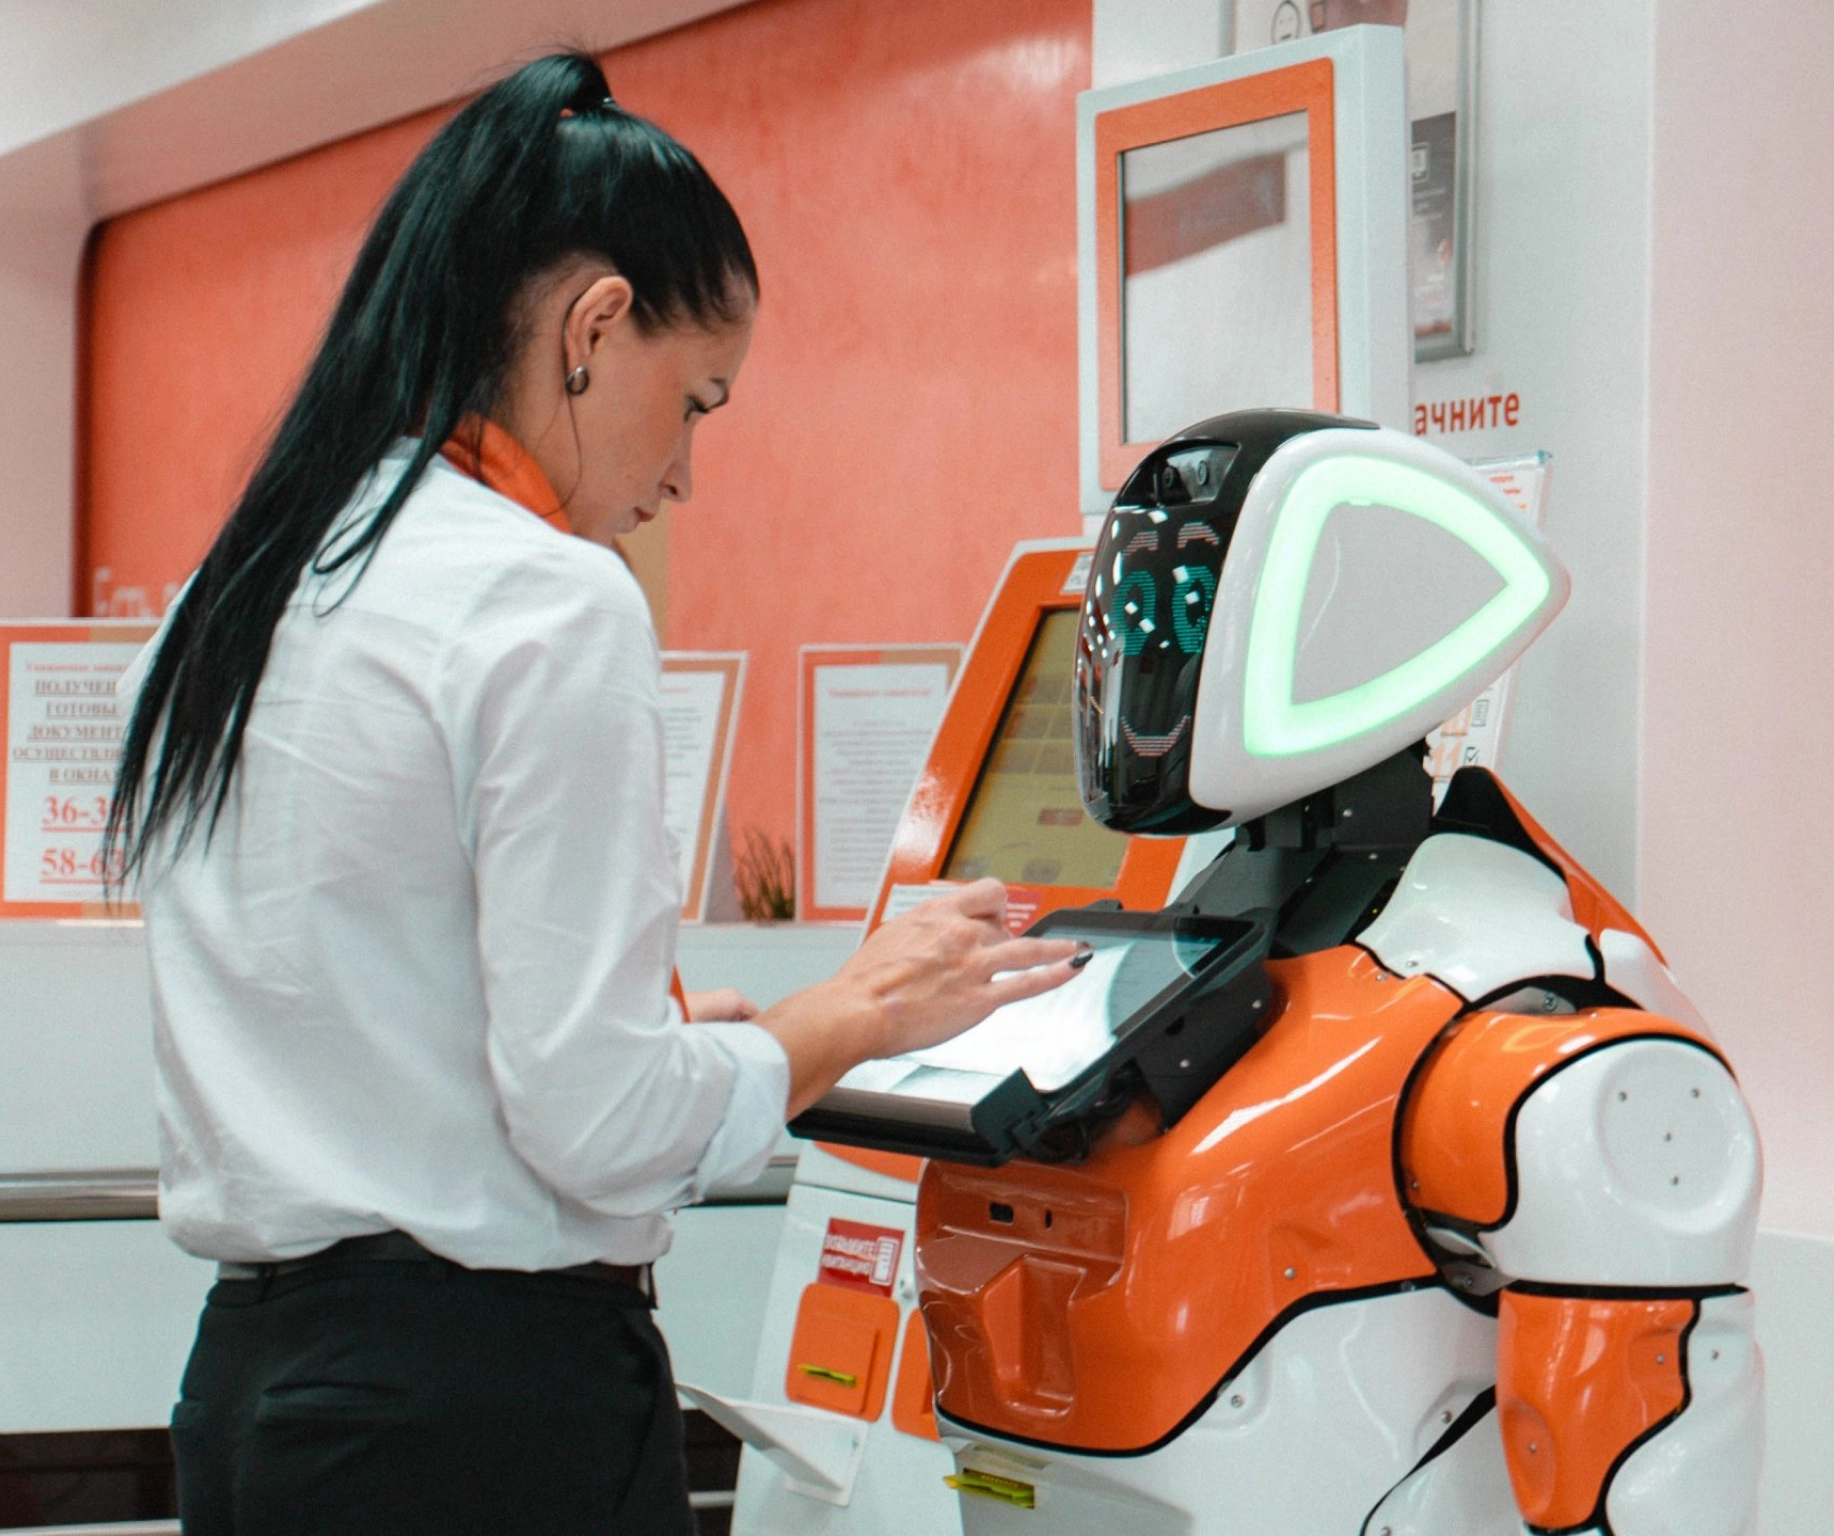 RobotizationAutomation-berexia (2)